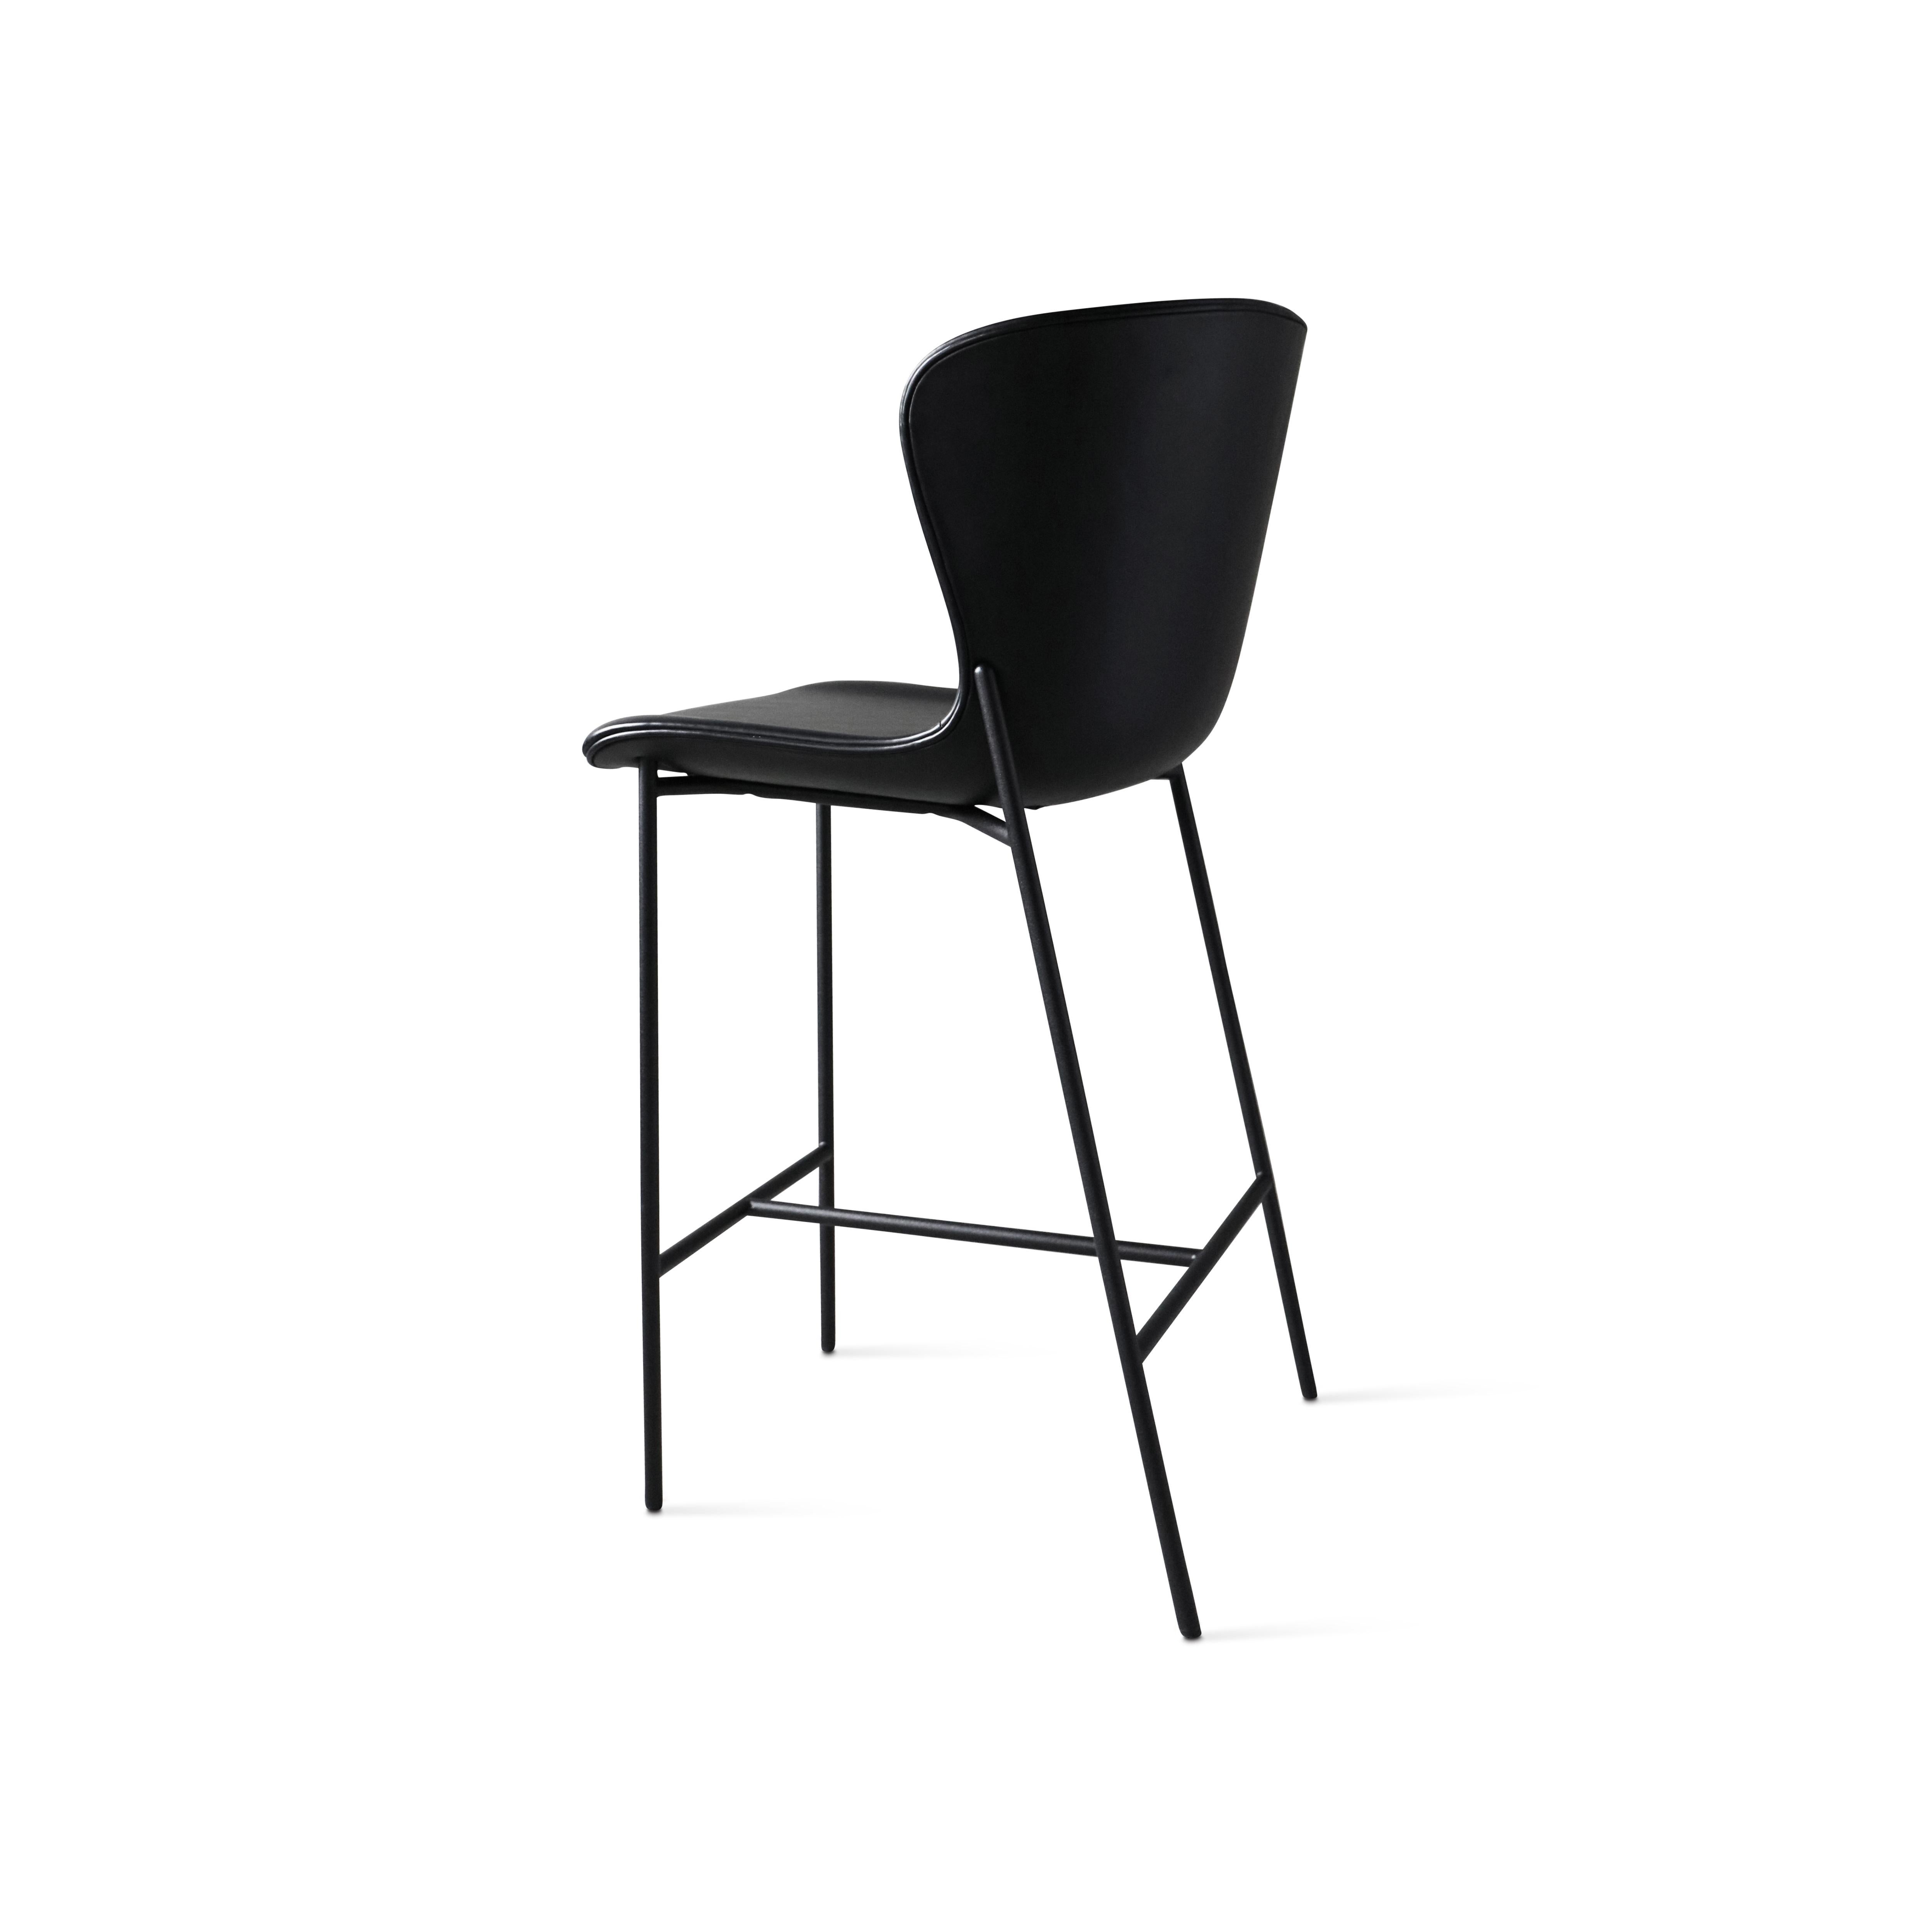 Pipe - chair 
Design: Friends & Founders
Model shown : Dakar Nevotex - Black Leather 0842 - Black Frame
Legs: Black steel

Dimensions H 100 / W 59 / D 55 cm (SH) 65 cm

Contemporary design studio Friends & Founders was founded in 2003 by Ida